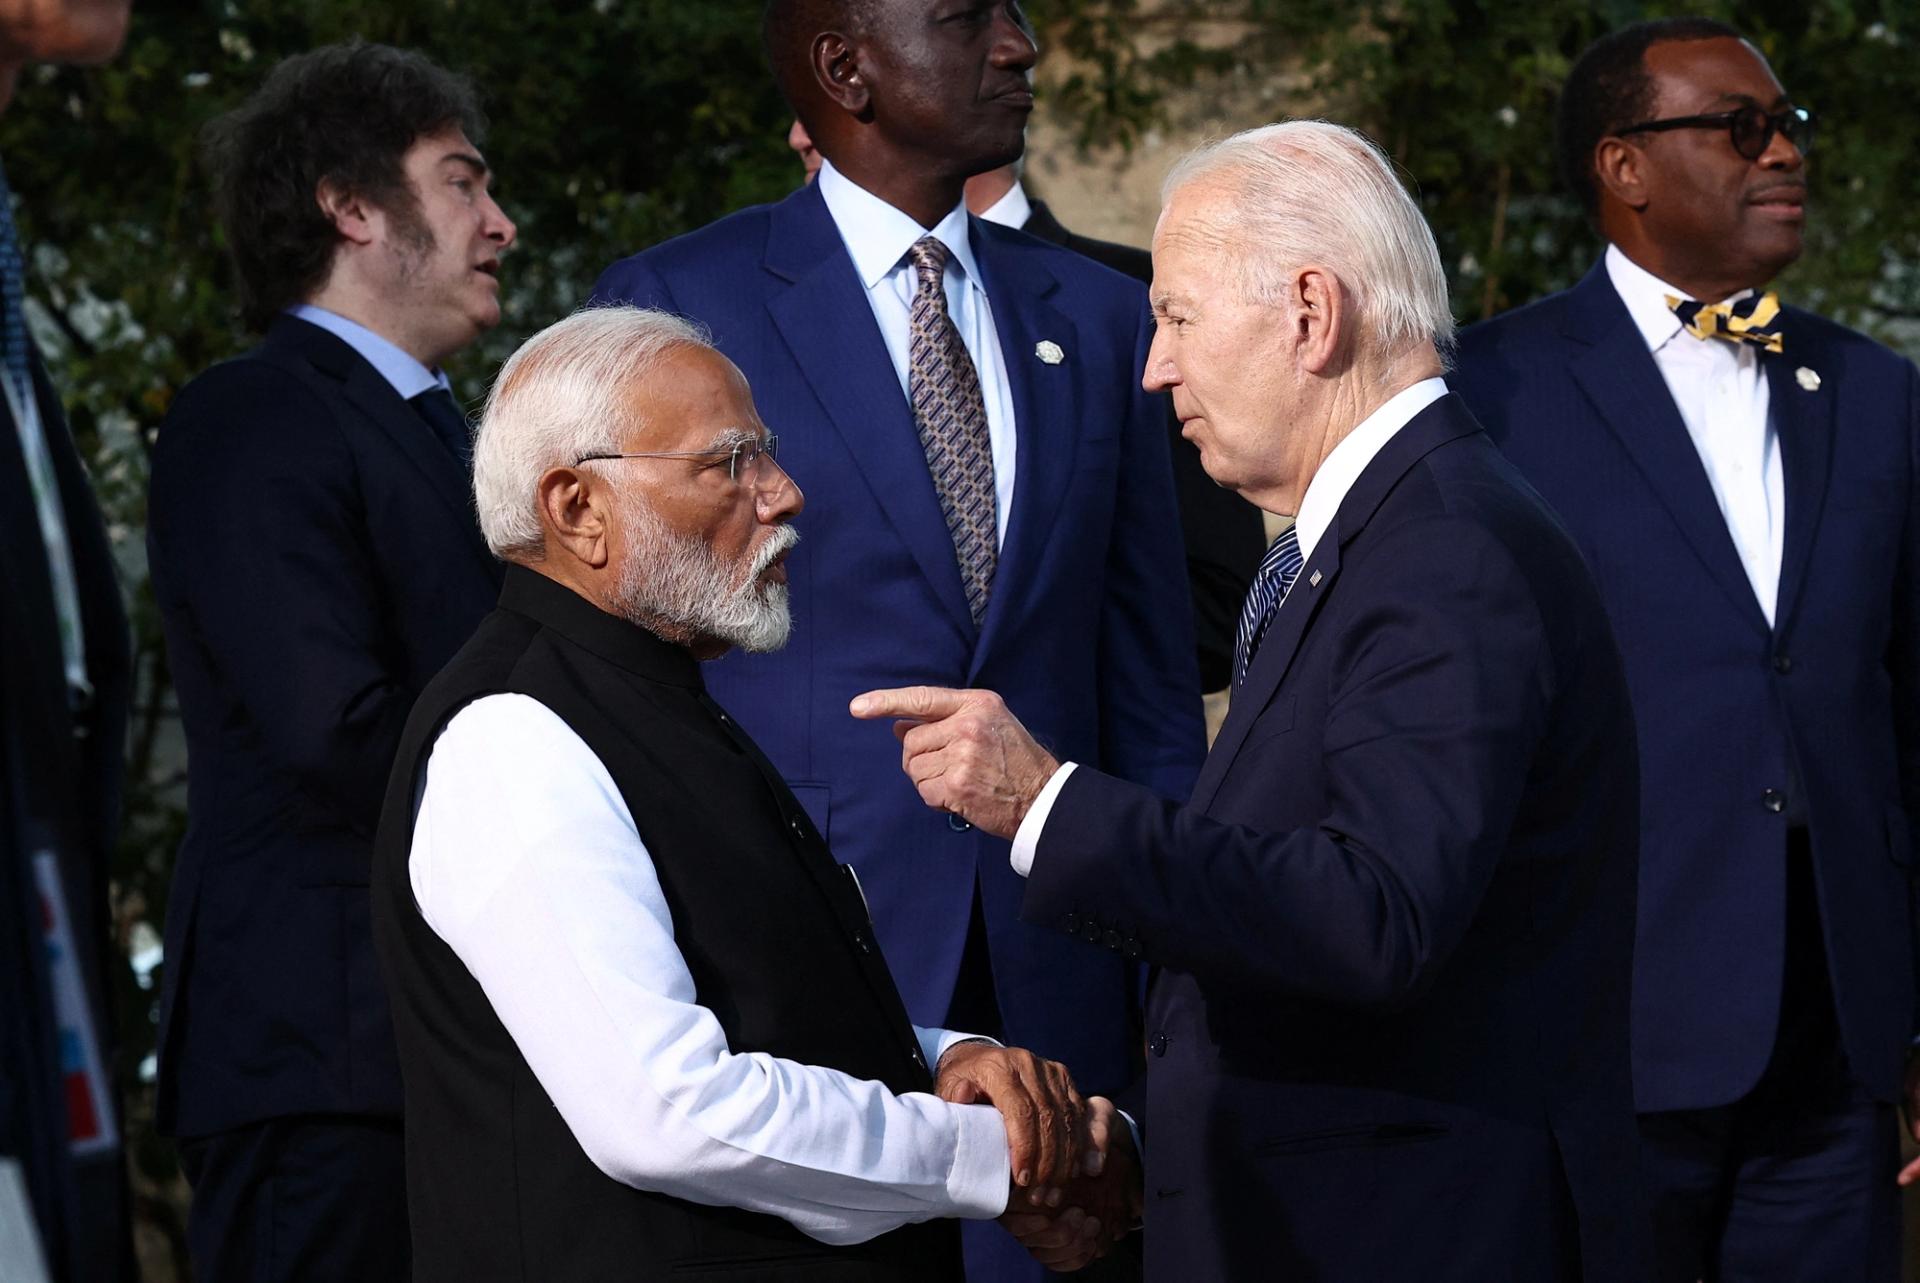 Senators tell Biden admin to increase pressure on India over Sikh murder plot (semafor.com)